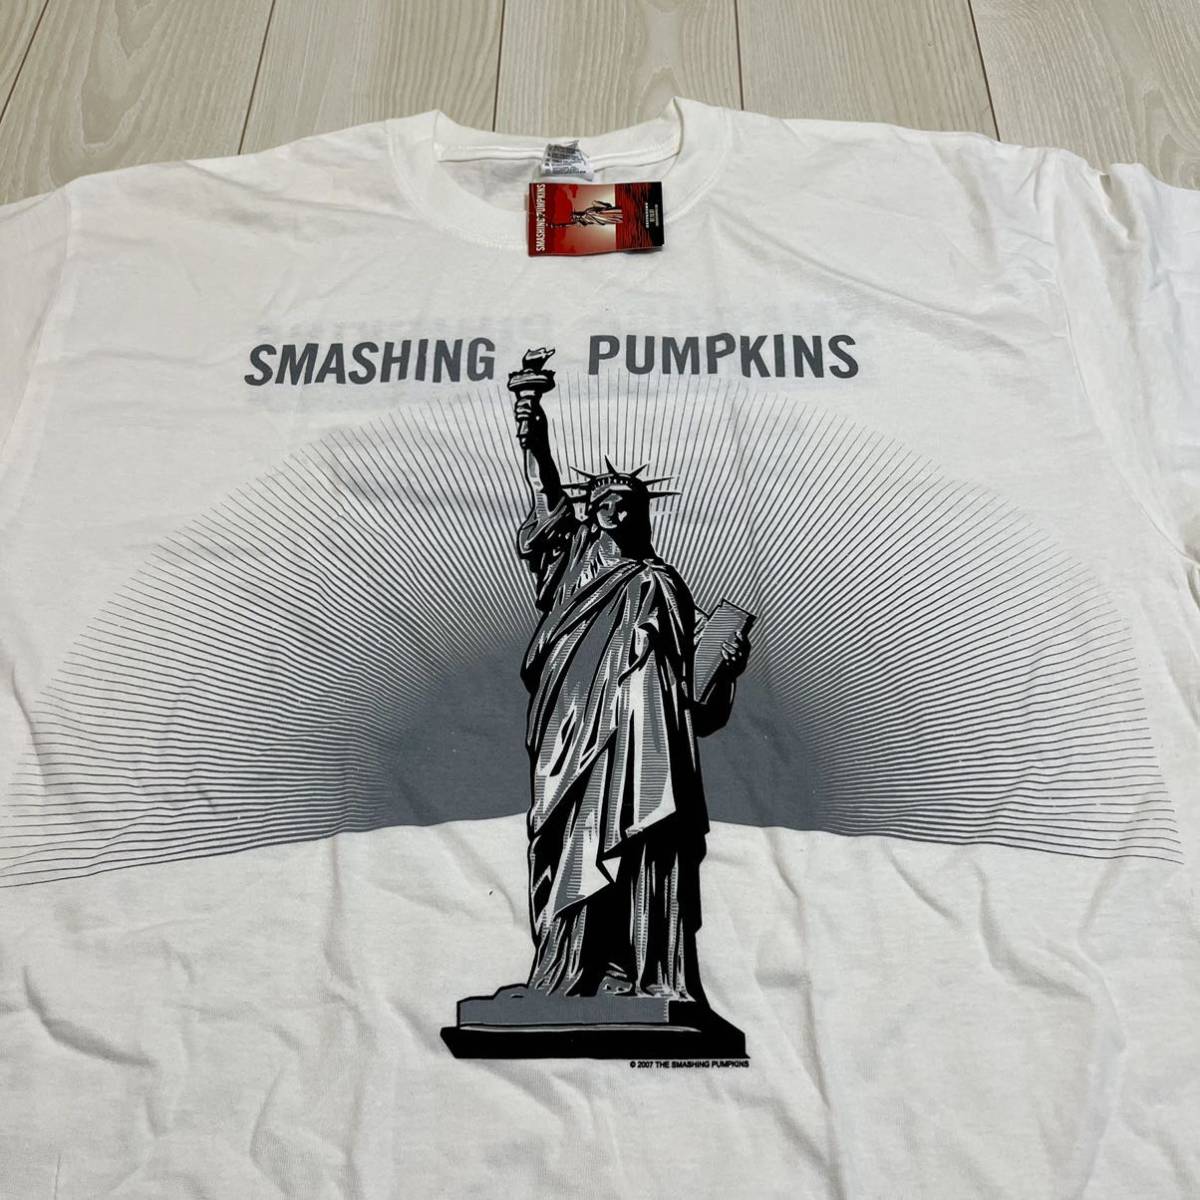 Smashing Pumpkins tシャツ vintage tシャツ sonic youth metallica Pearl Jam Nirvana Soundgarden limp bizkit スマッシングパンプキンズ